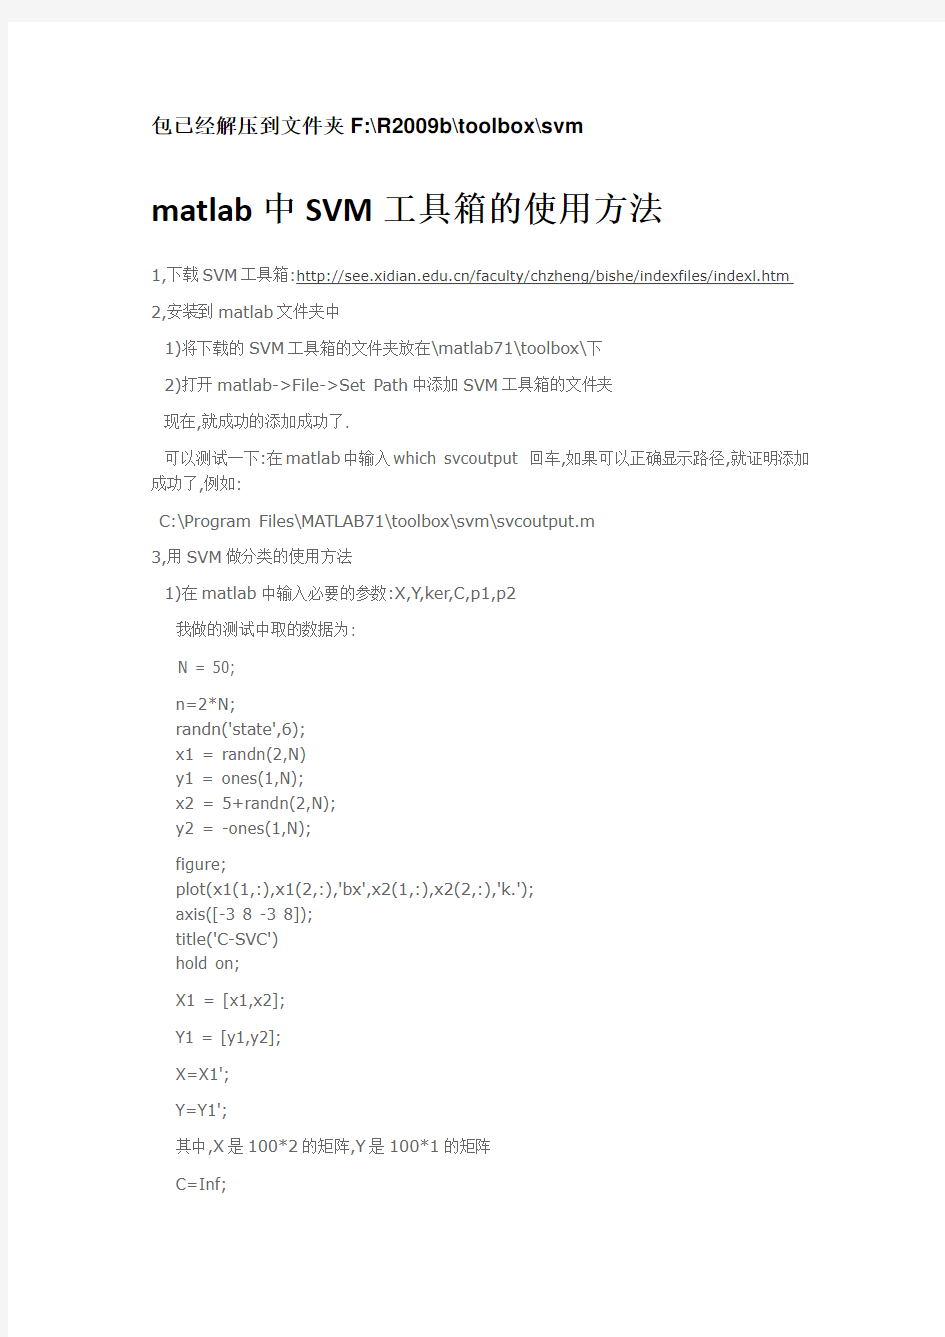 matlab中SVM工具箱的使用方法资料